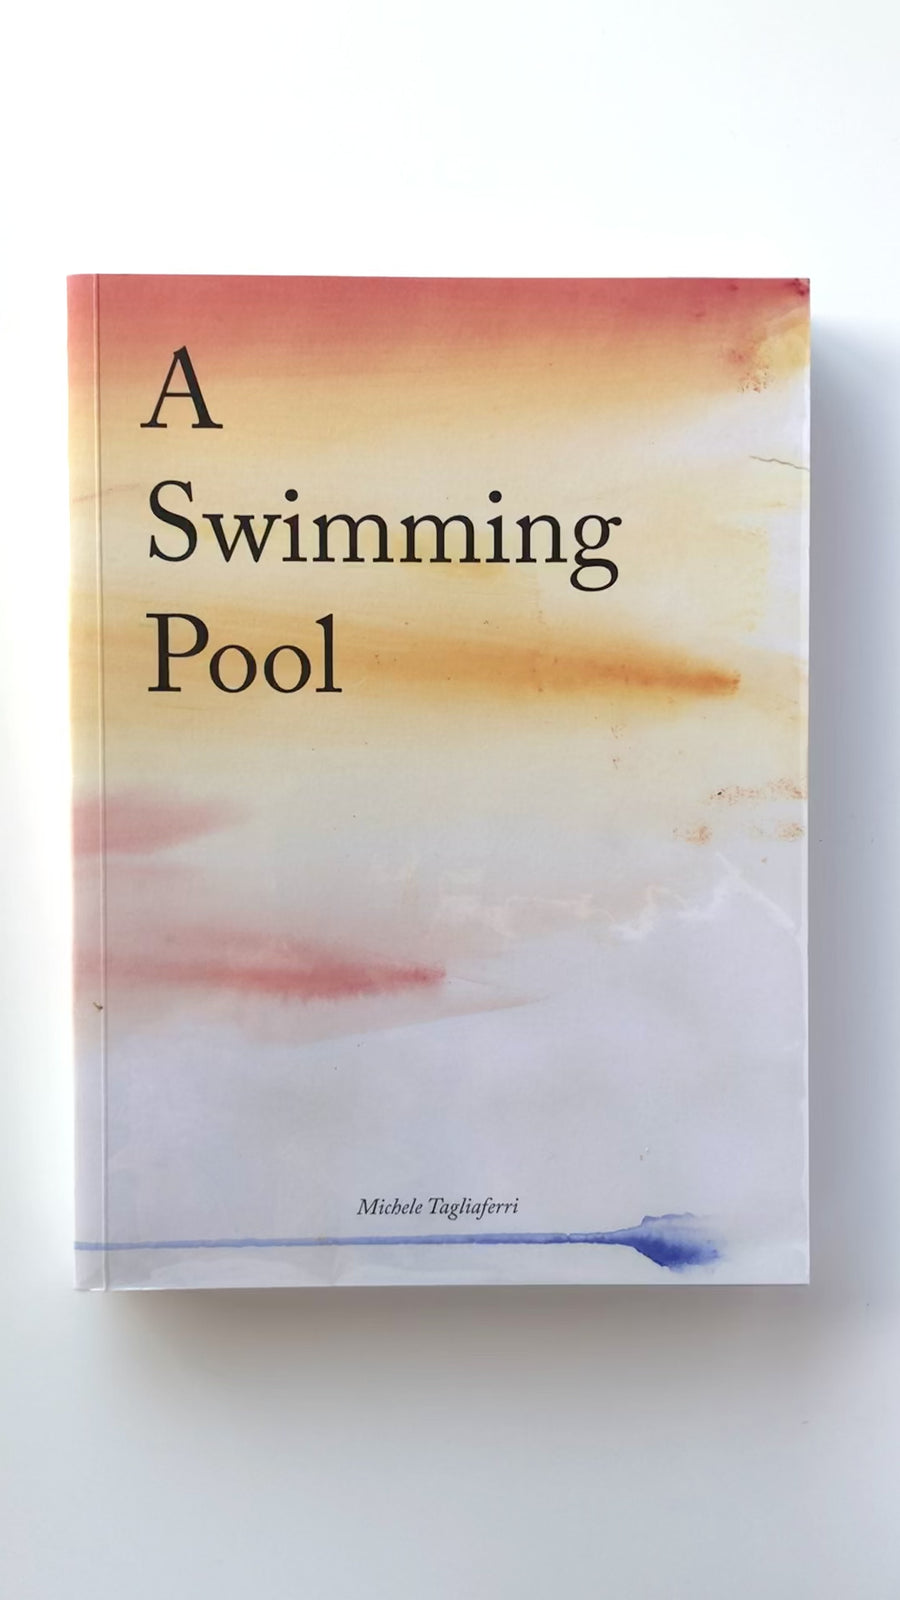 (Signed) A Swimming Pool by Michele Tagliaferri